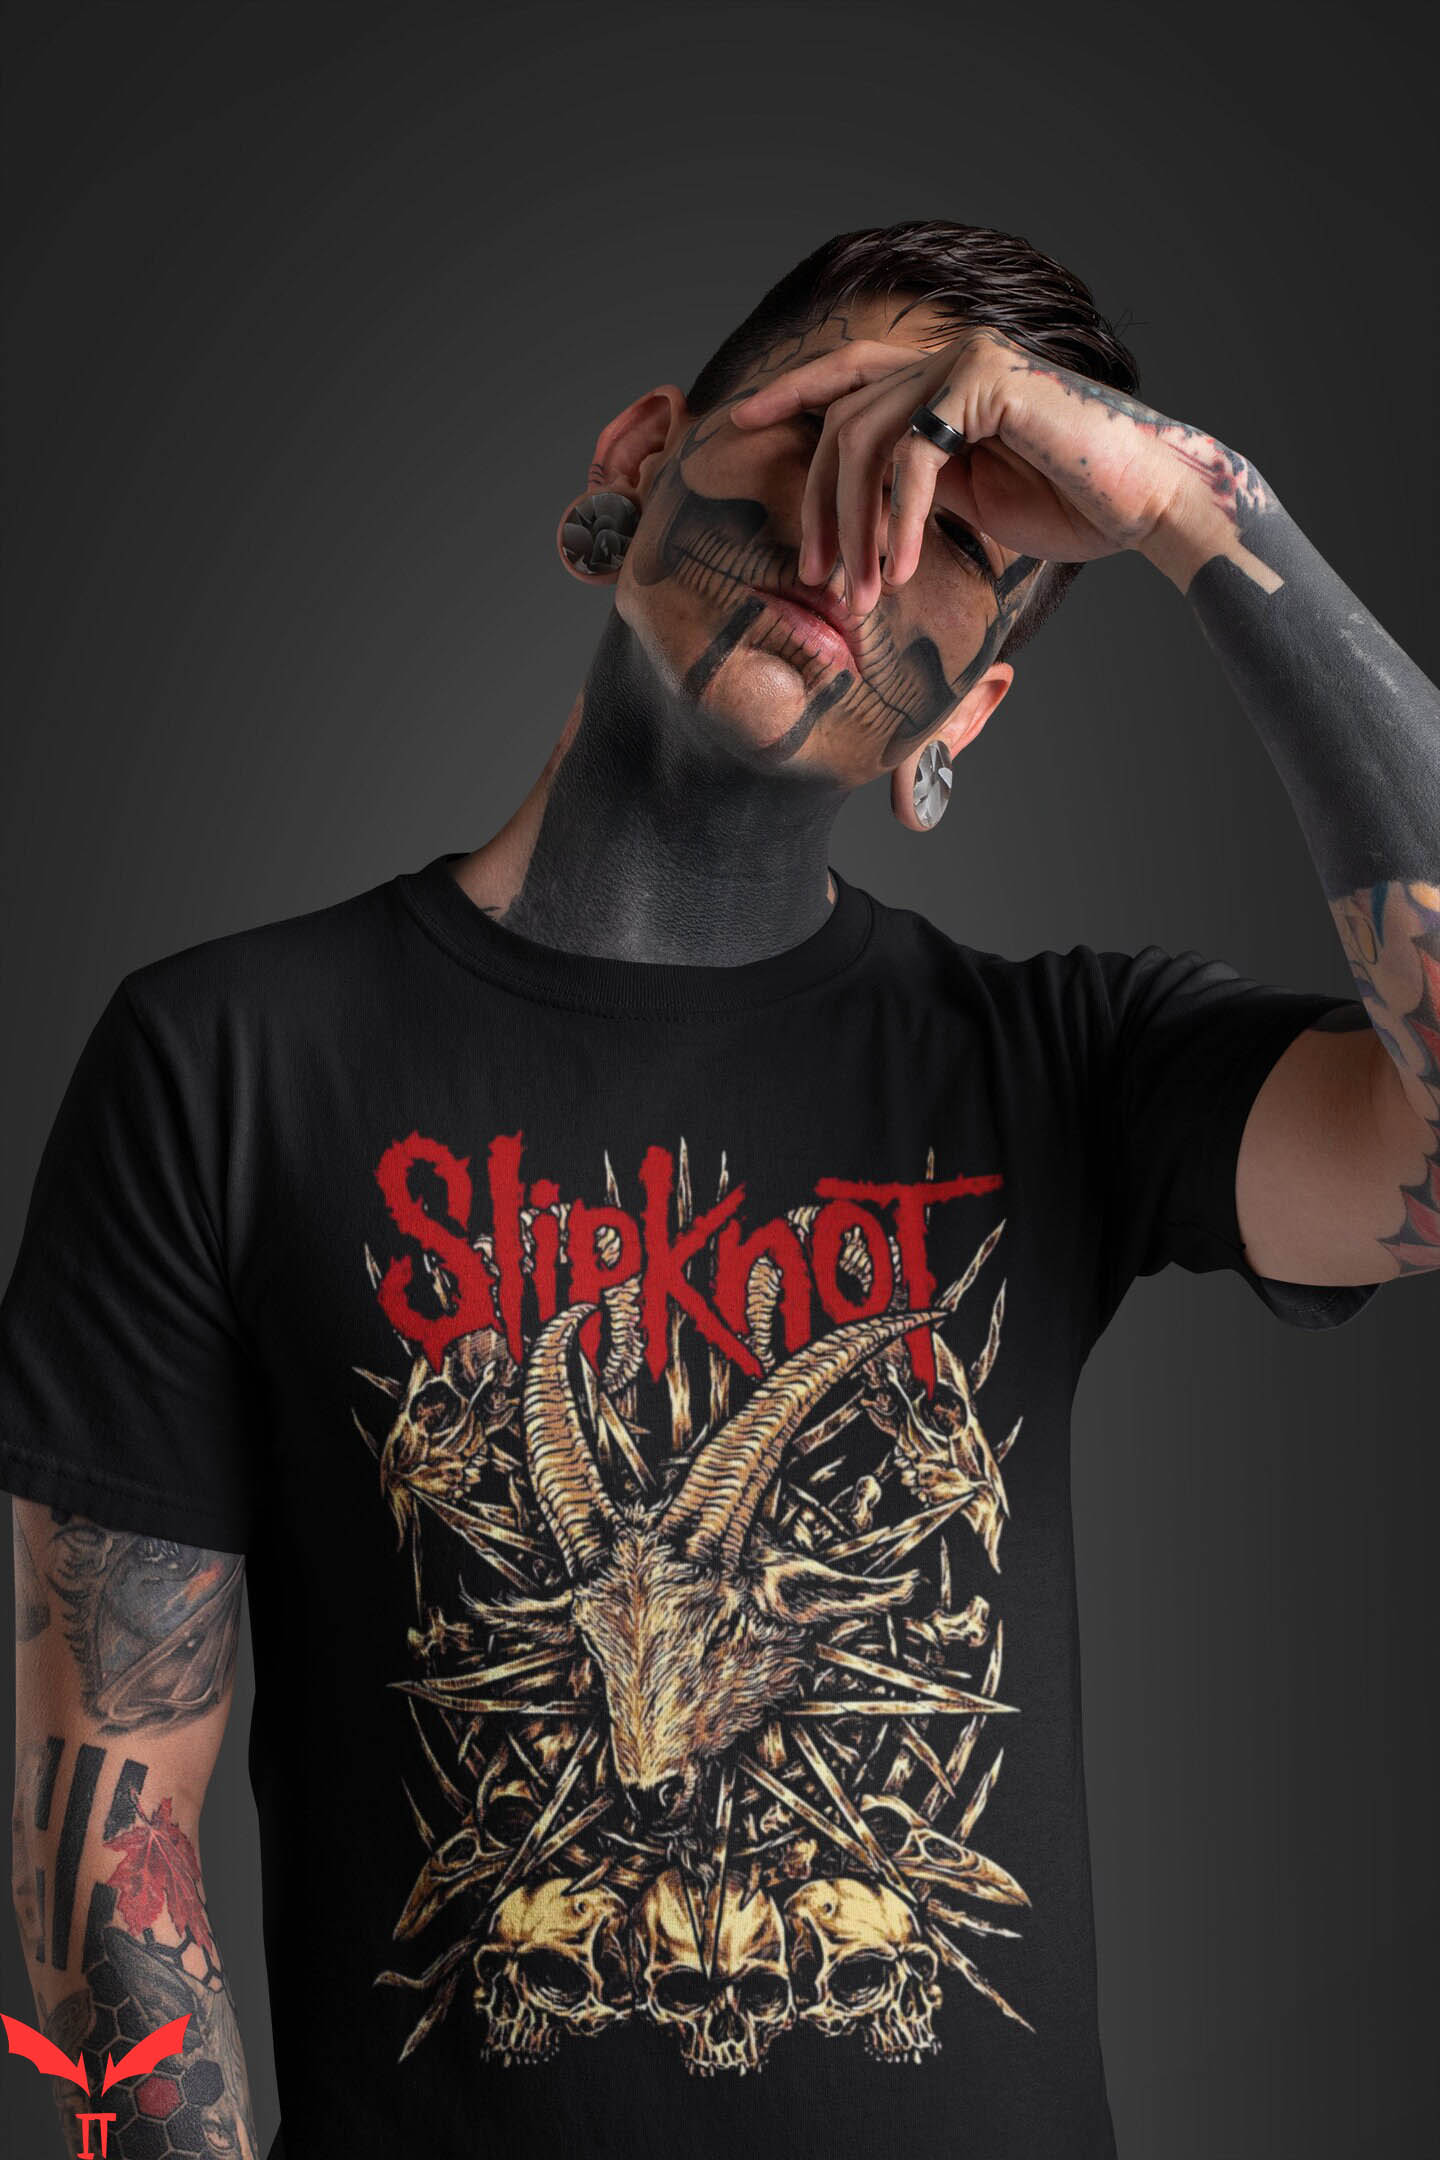 Slipknot Vintage T-Shirt Slipknot Metal Band Tee